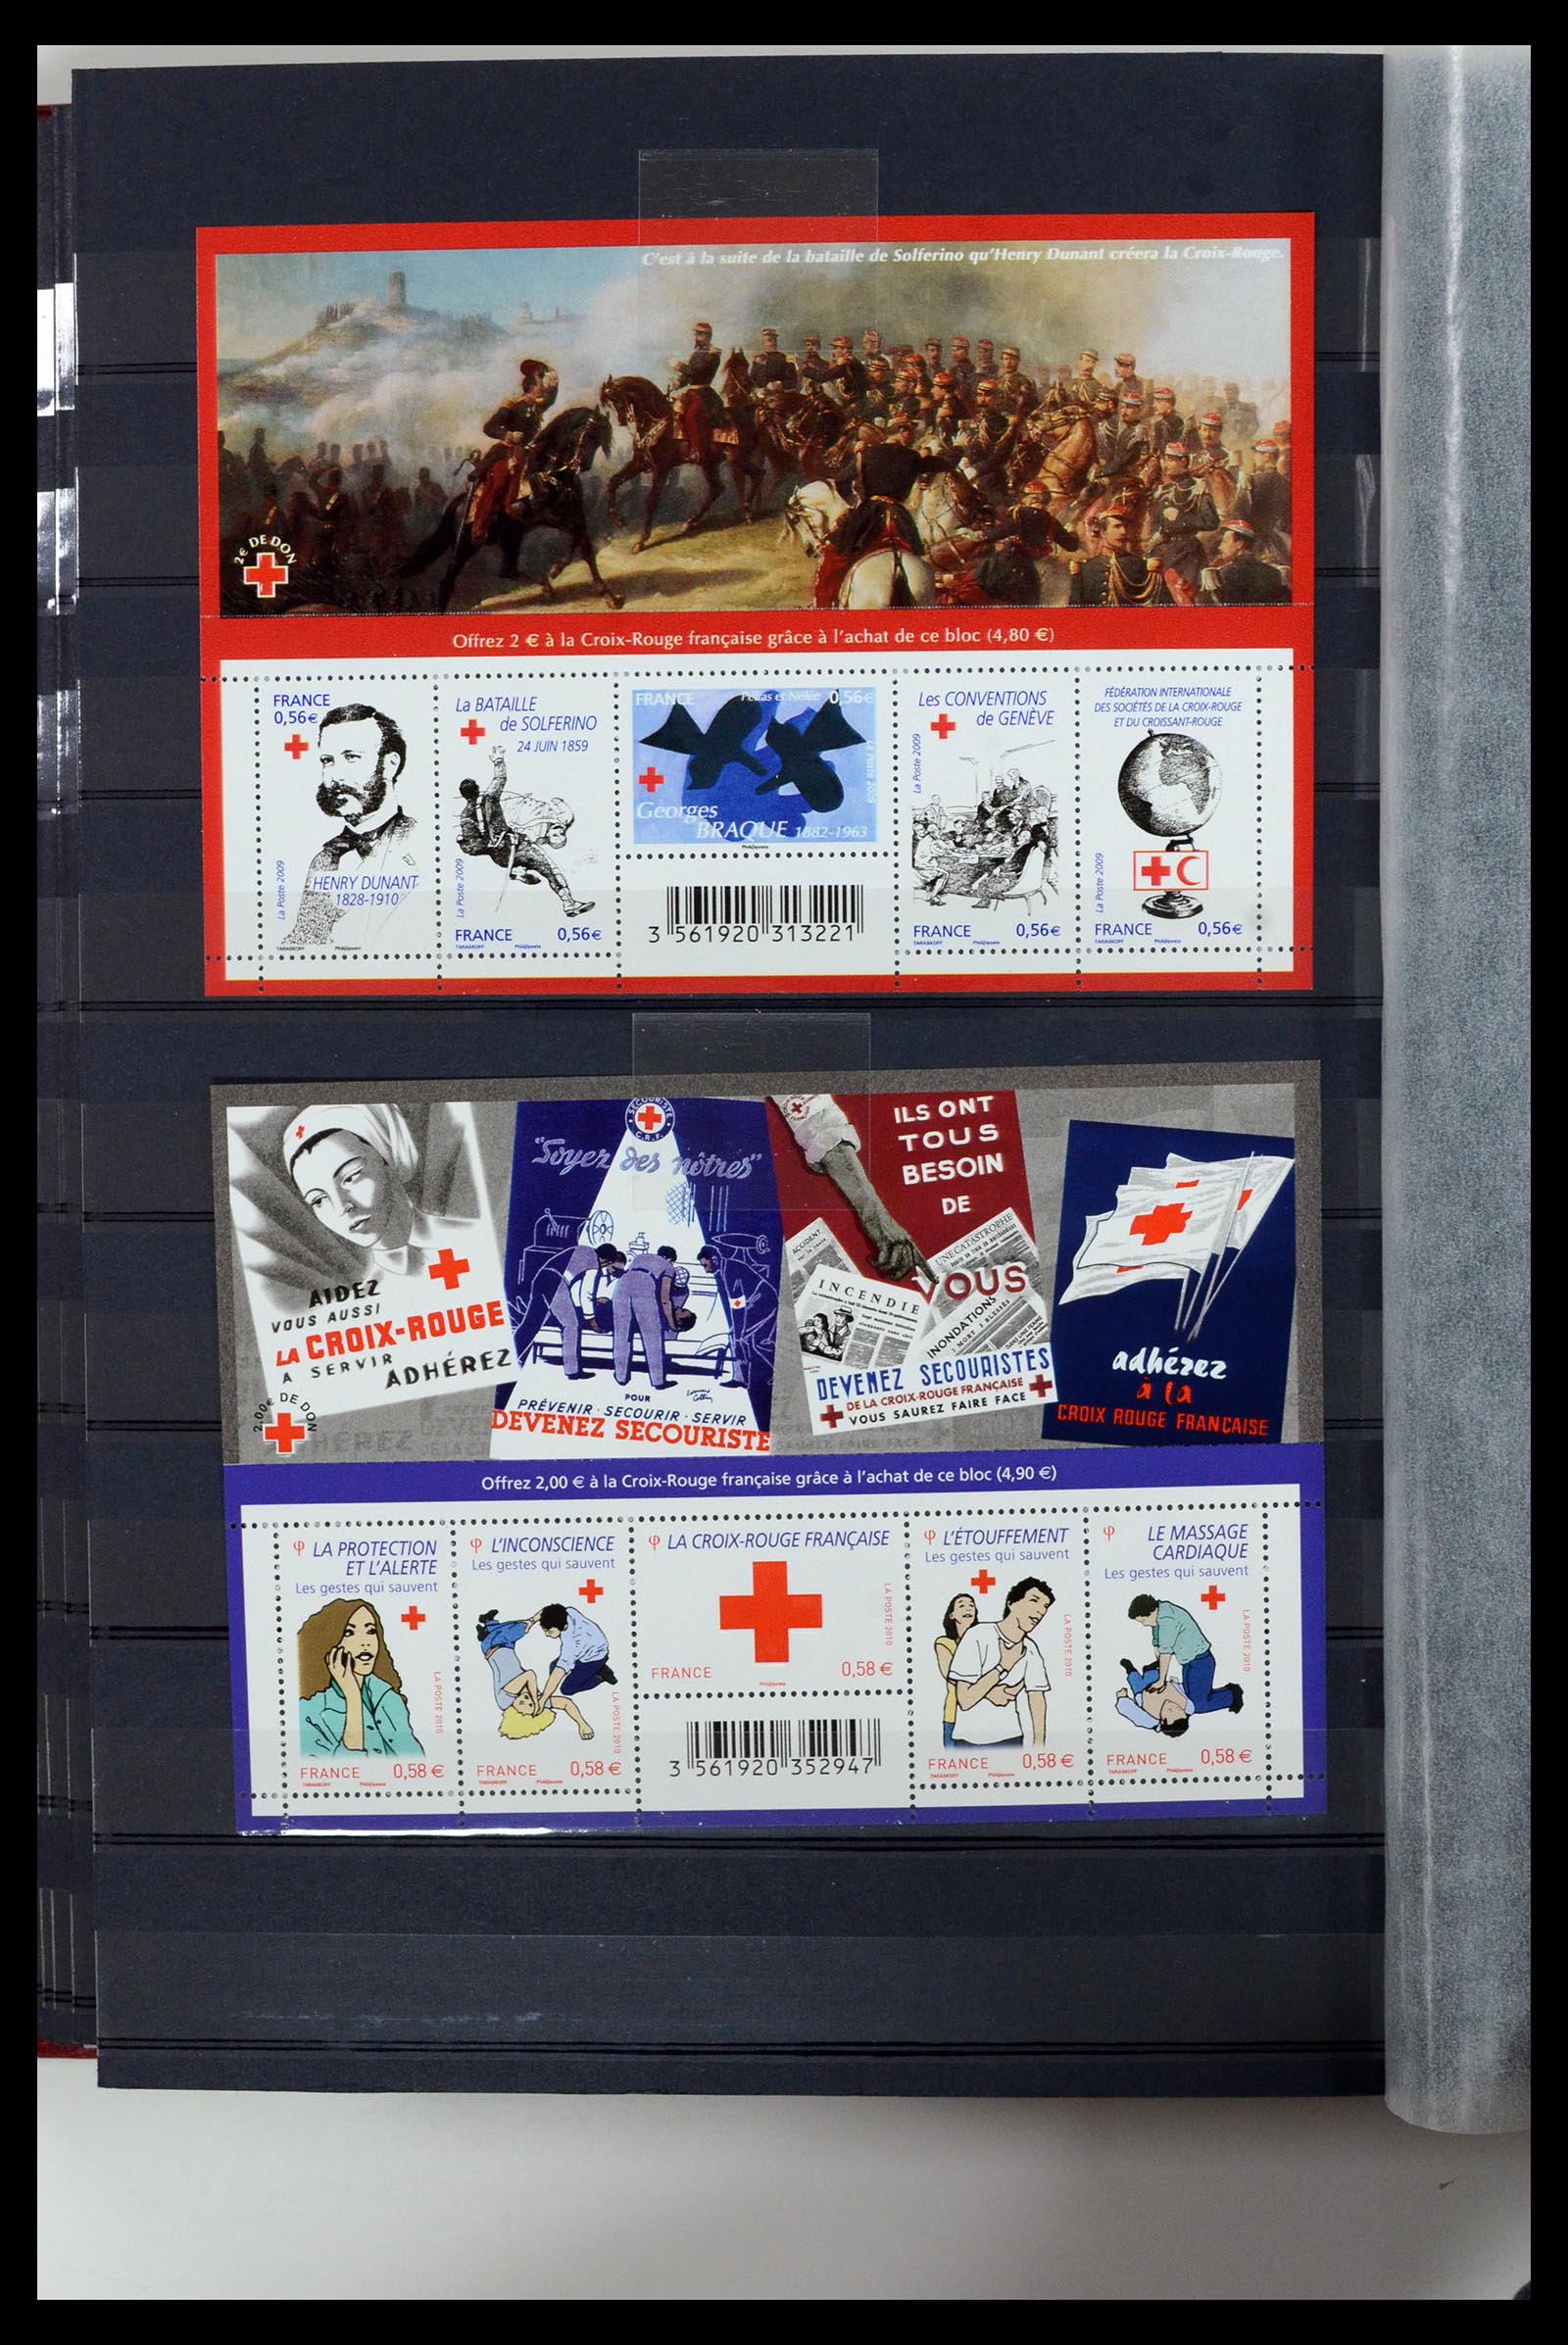 36728 024 - Stamp collection 36728 France stamp booklets 1952-2011.